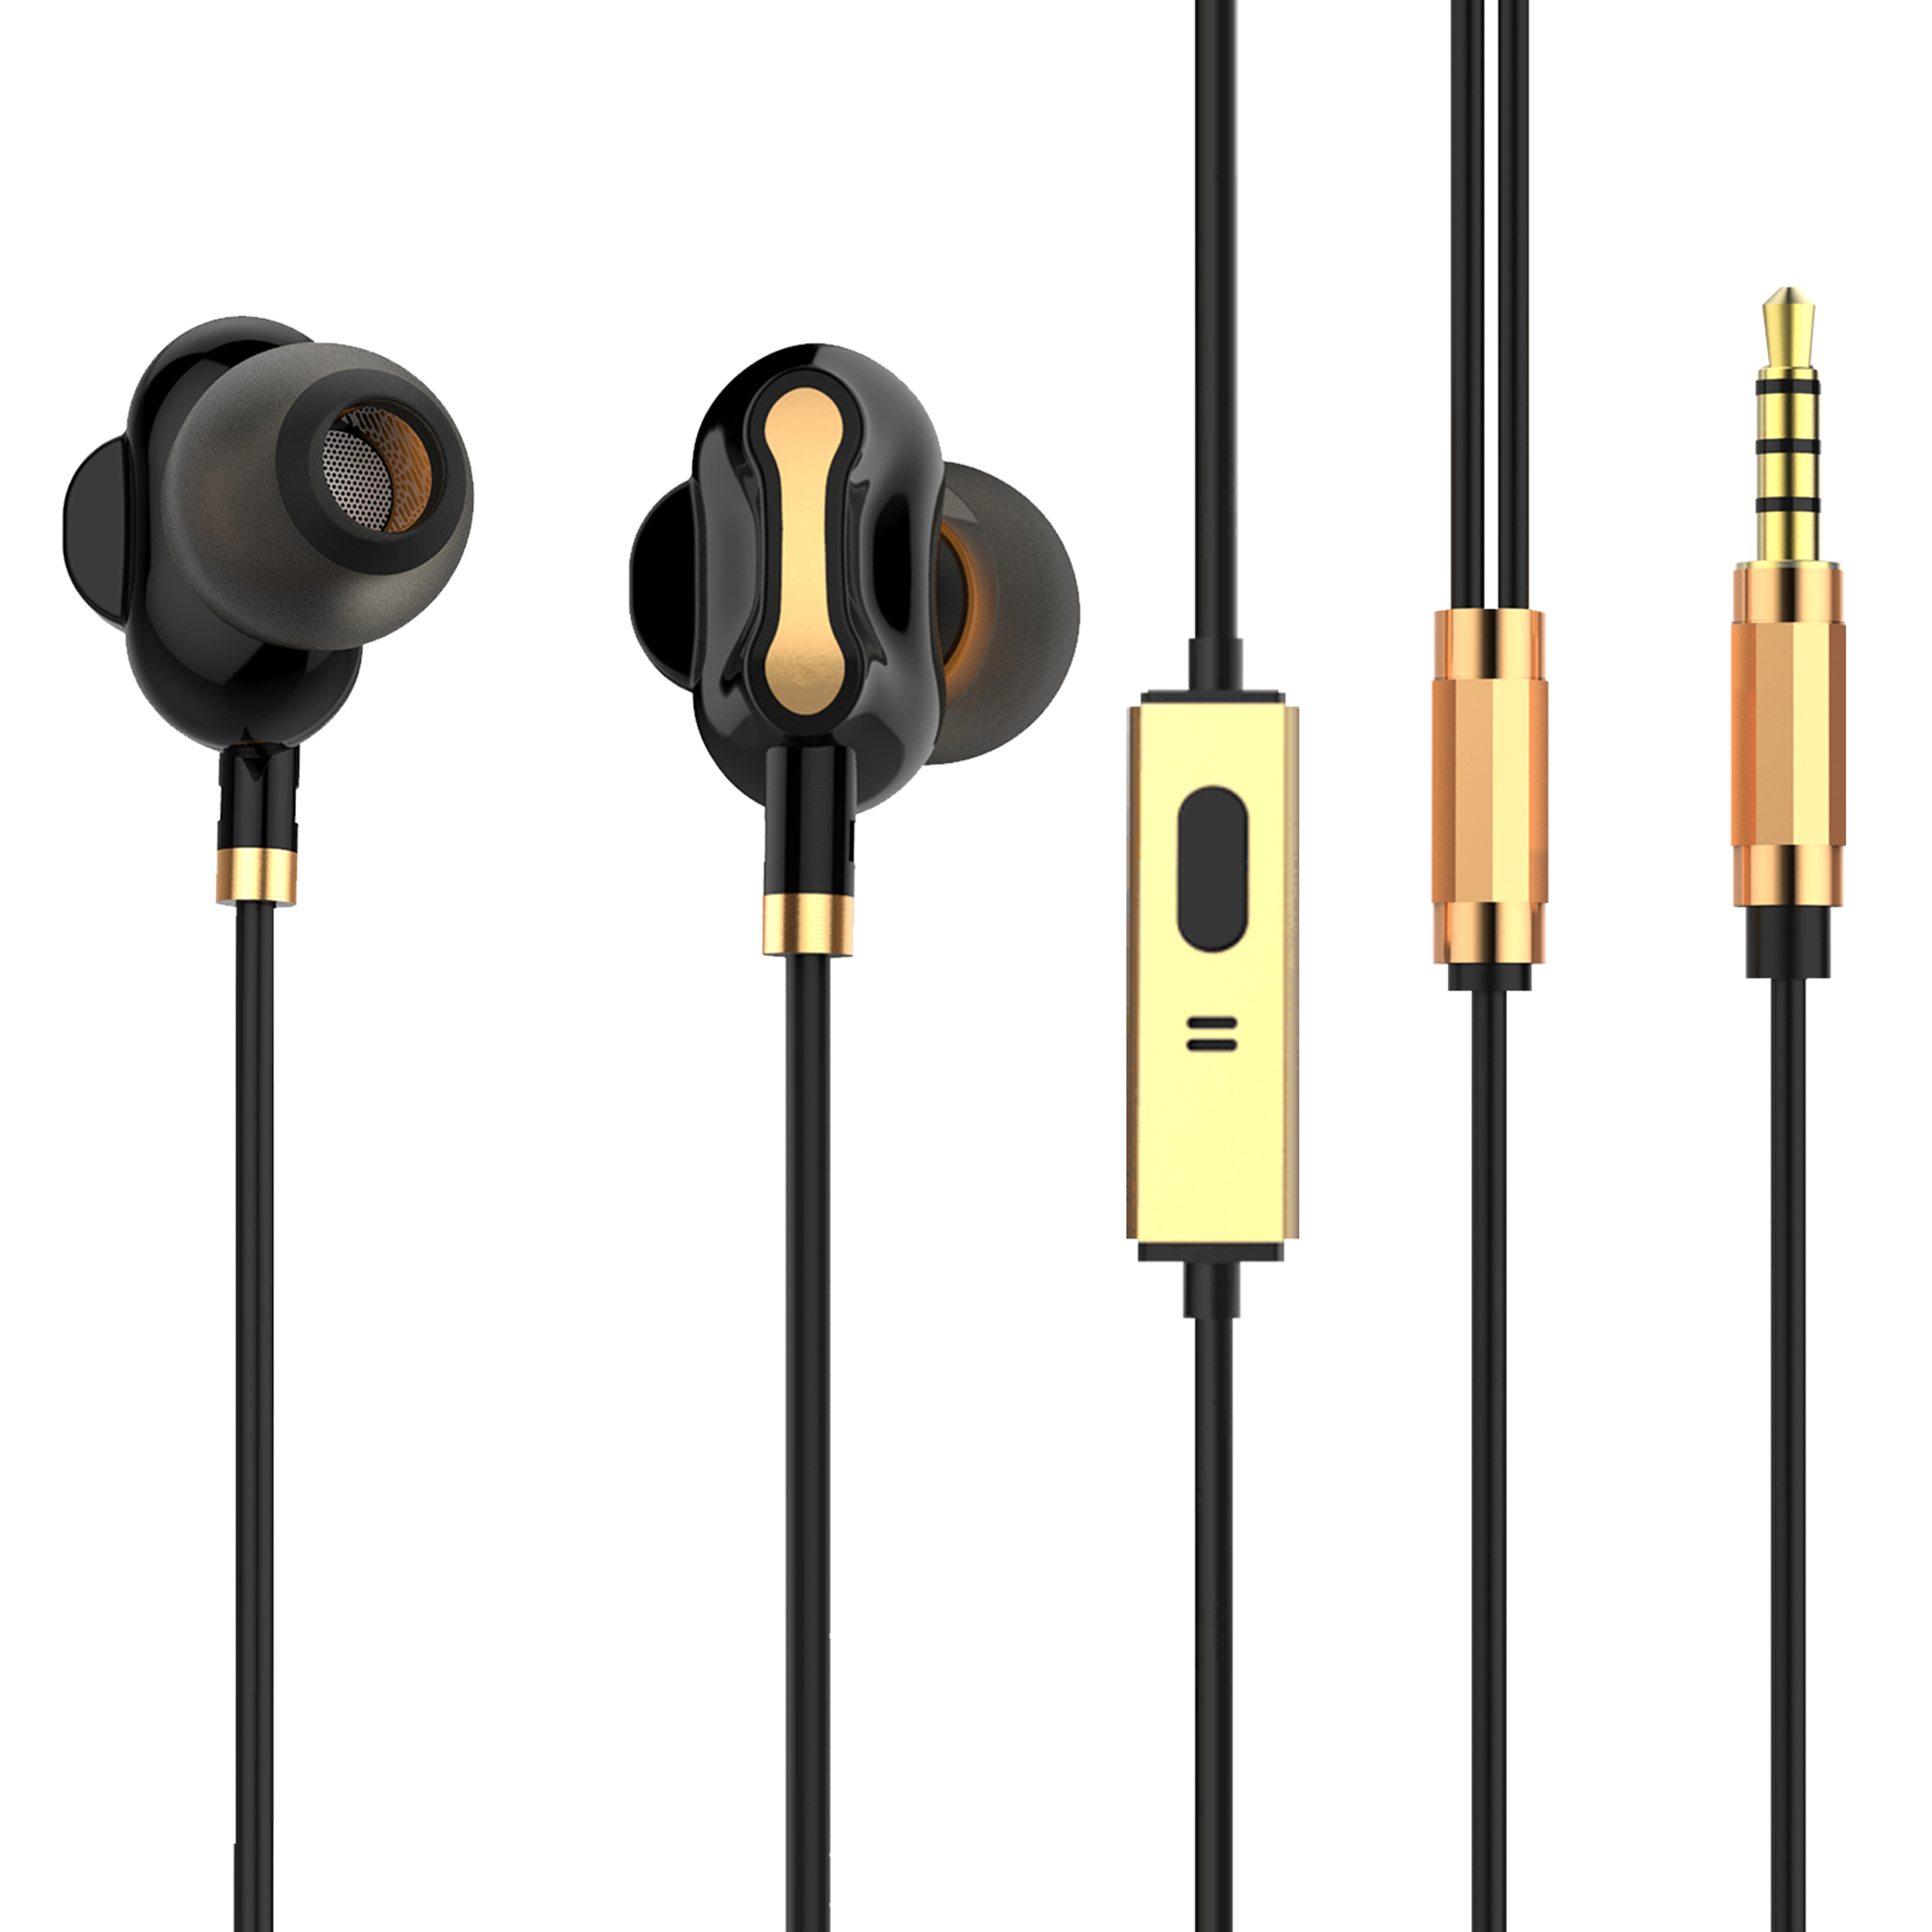 TAGG launches new premium earphone - SoundGear 500 Dual Driver 2